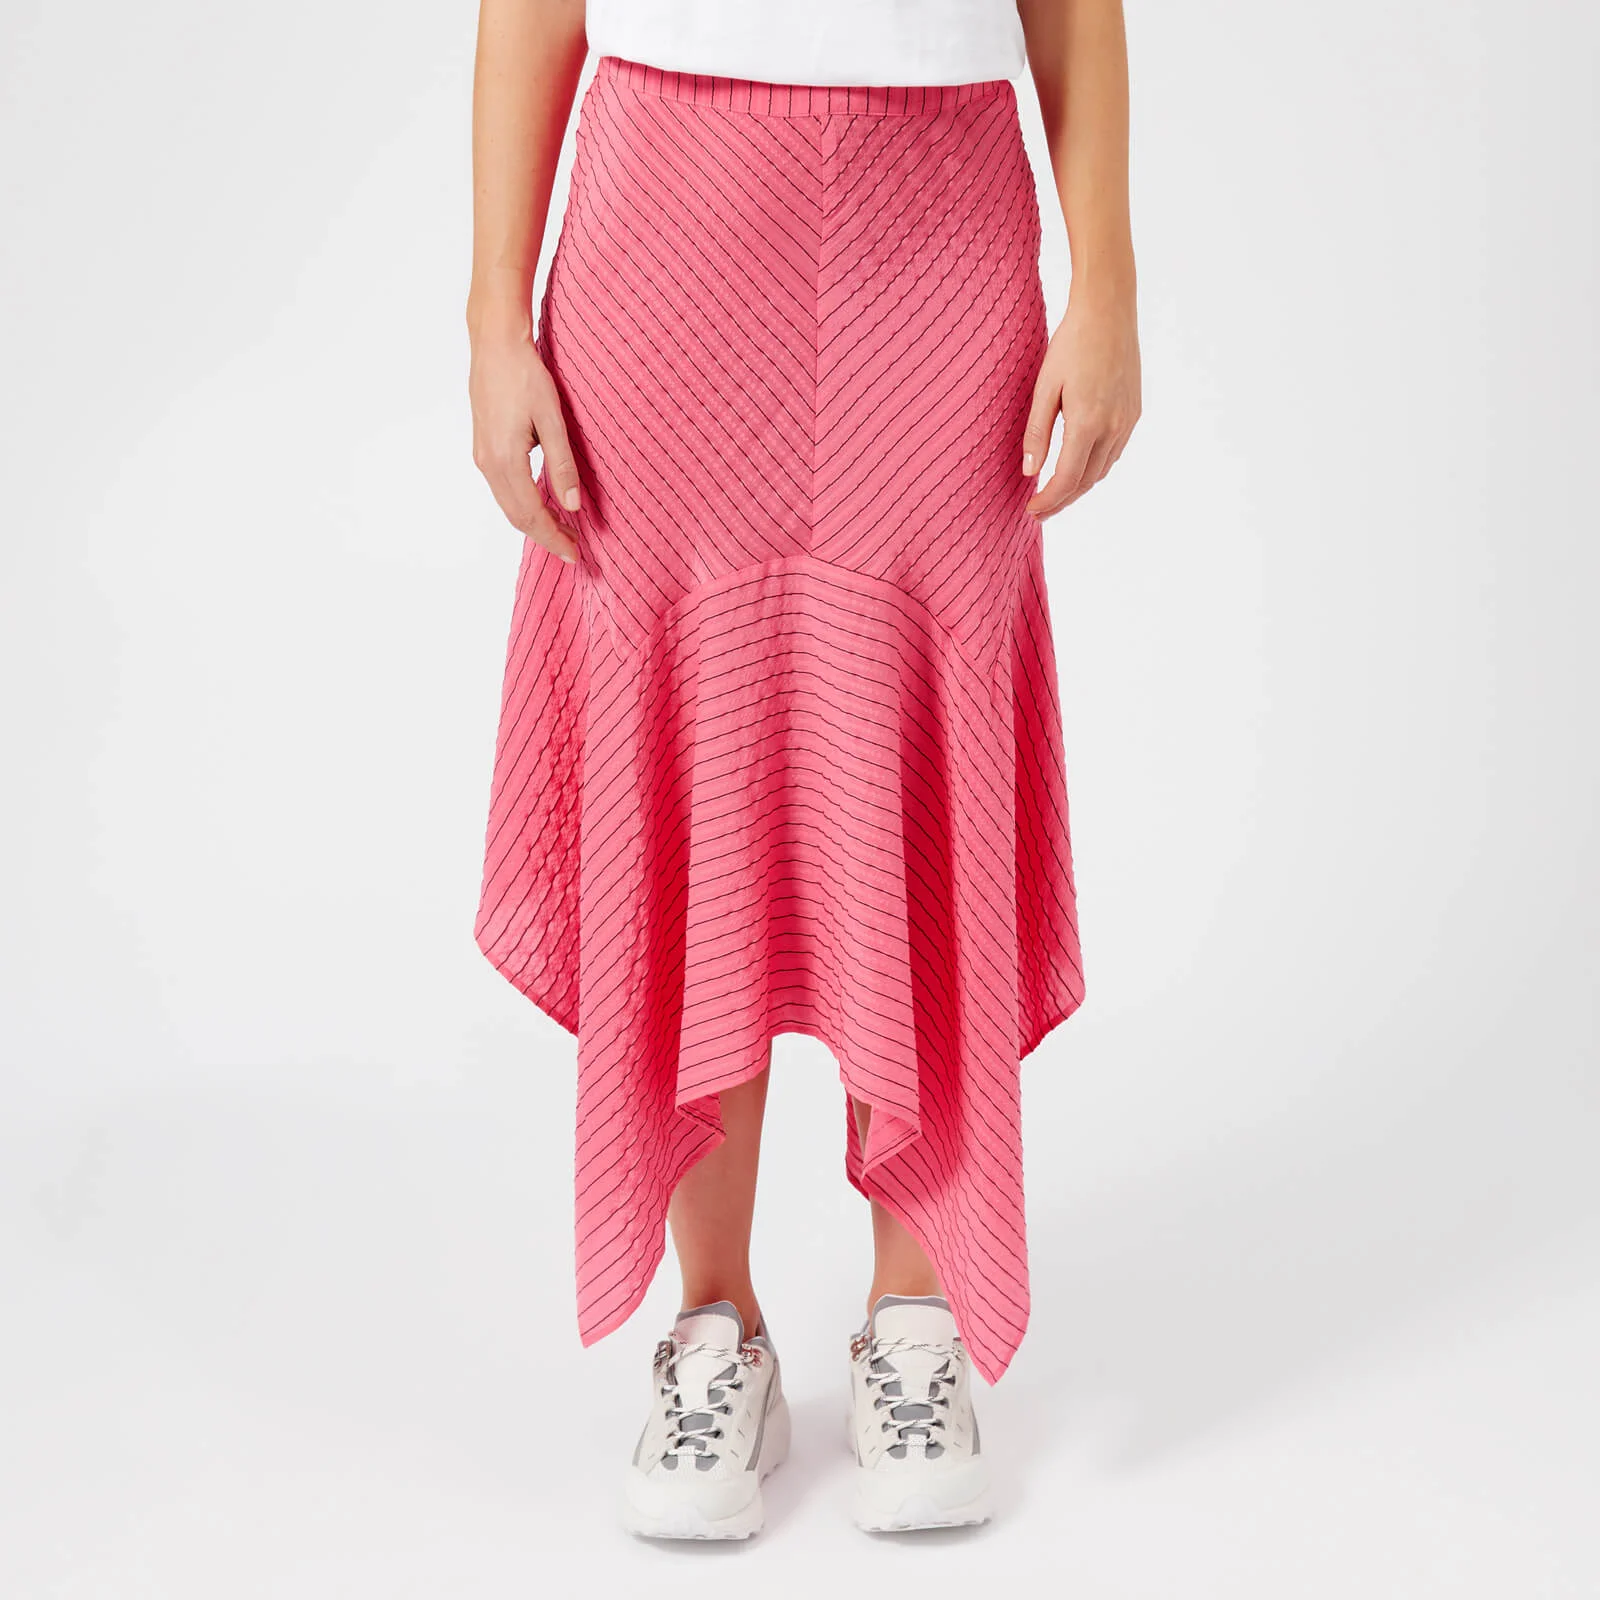 Ganni Women's Lynch Seersucker Skirt - Hot Pink Image 1